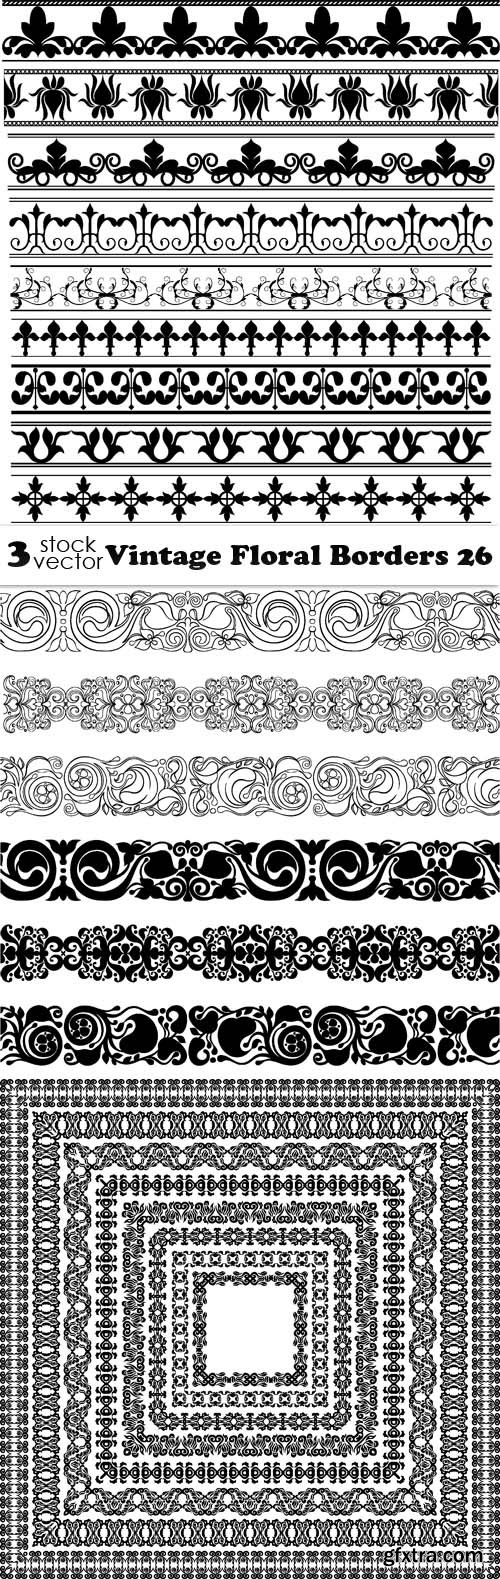 Vectors - Vintage Floral Borders 26